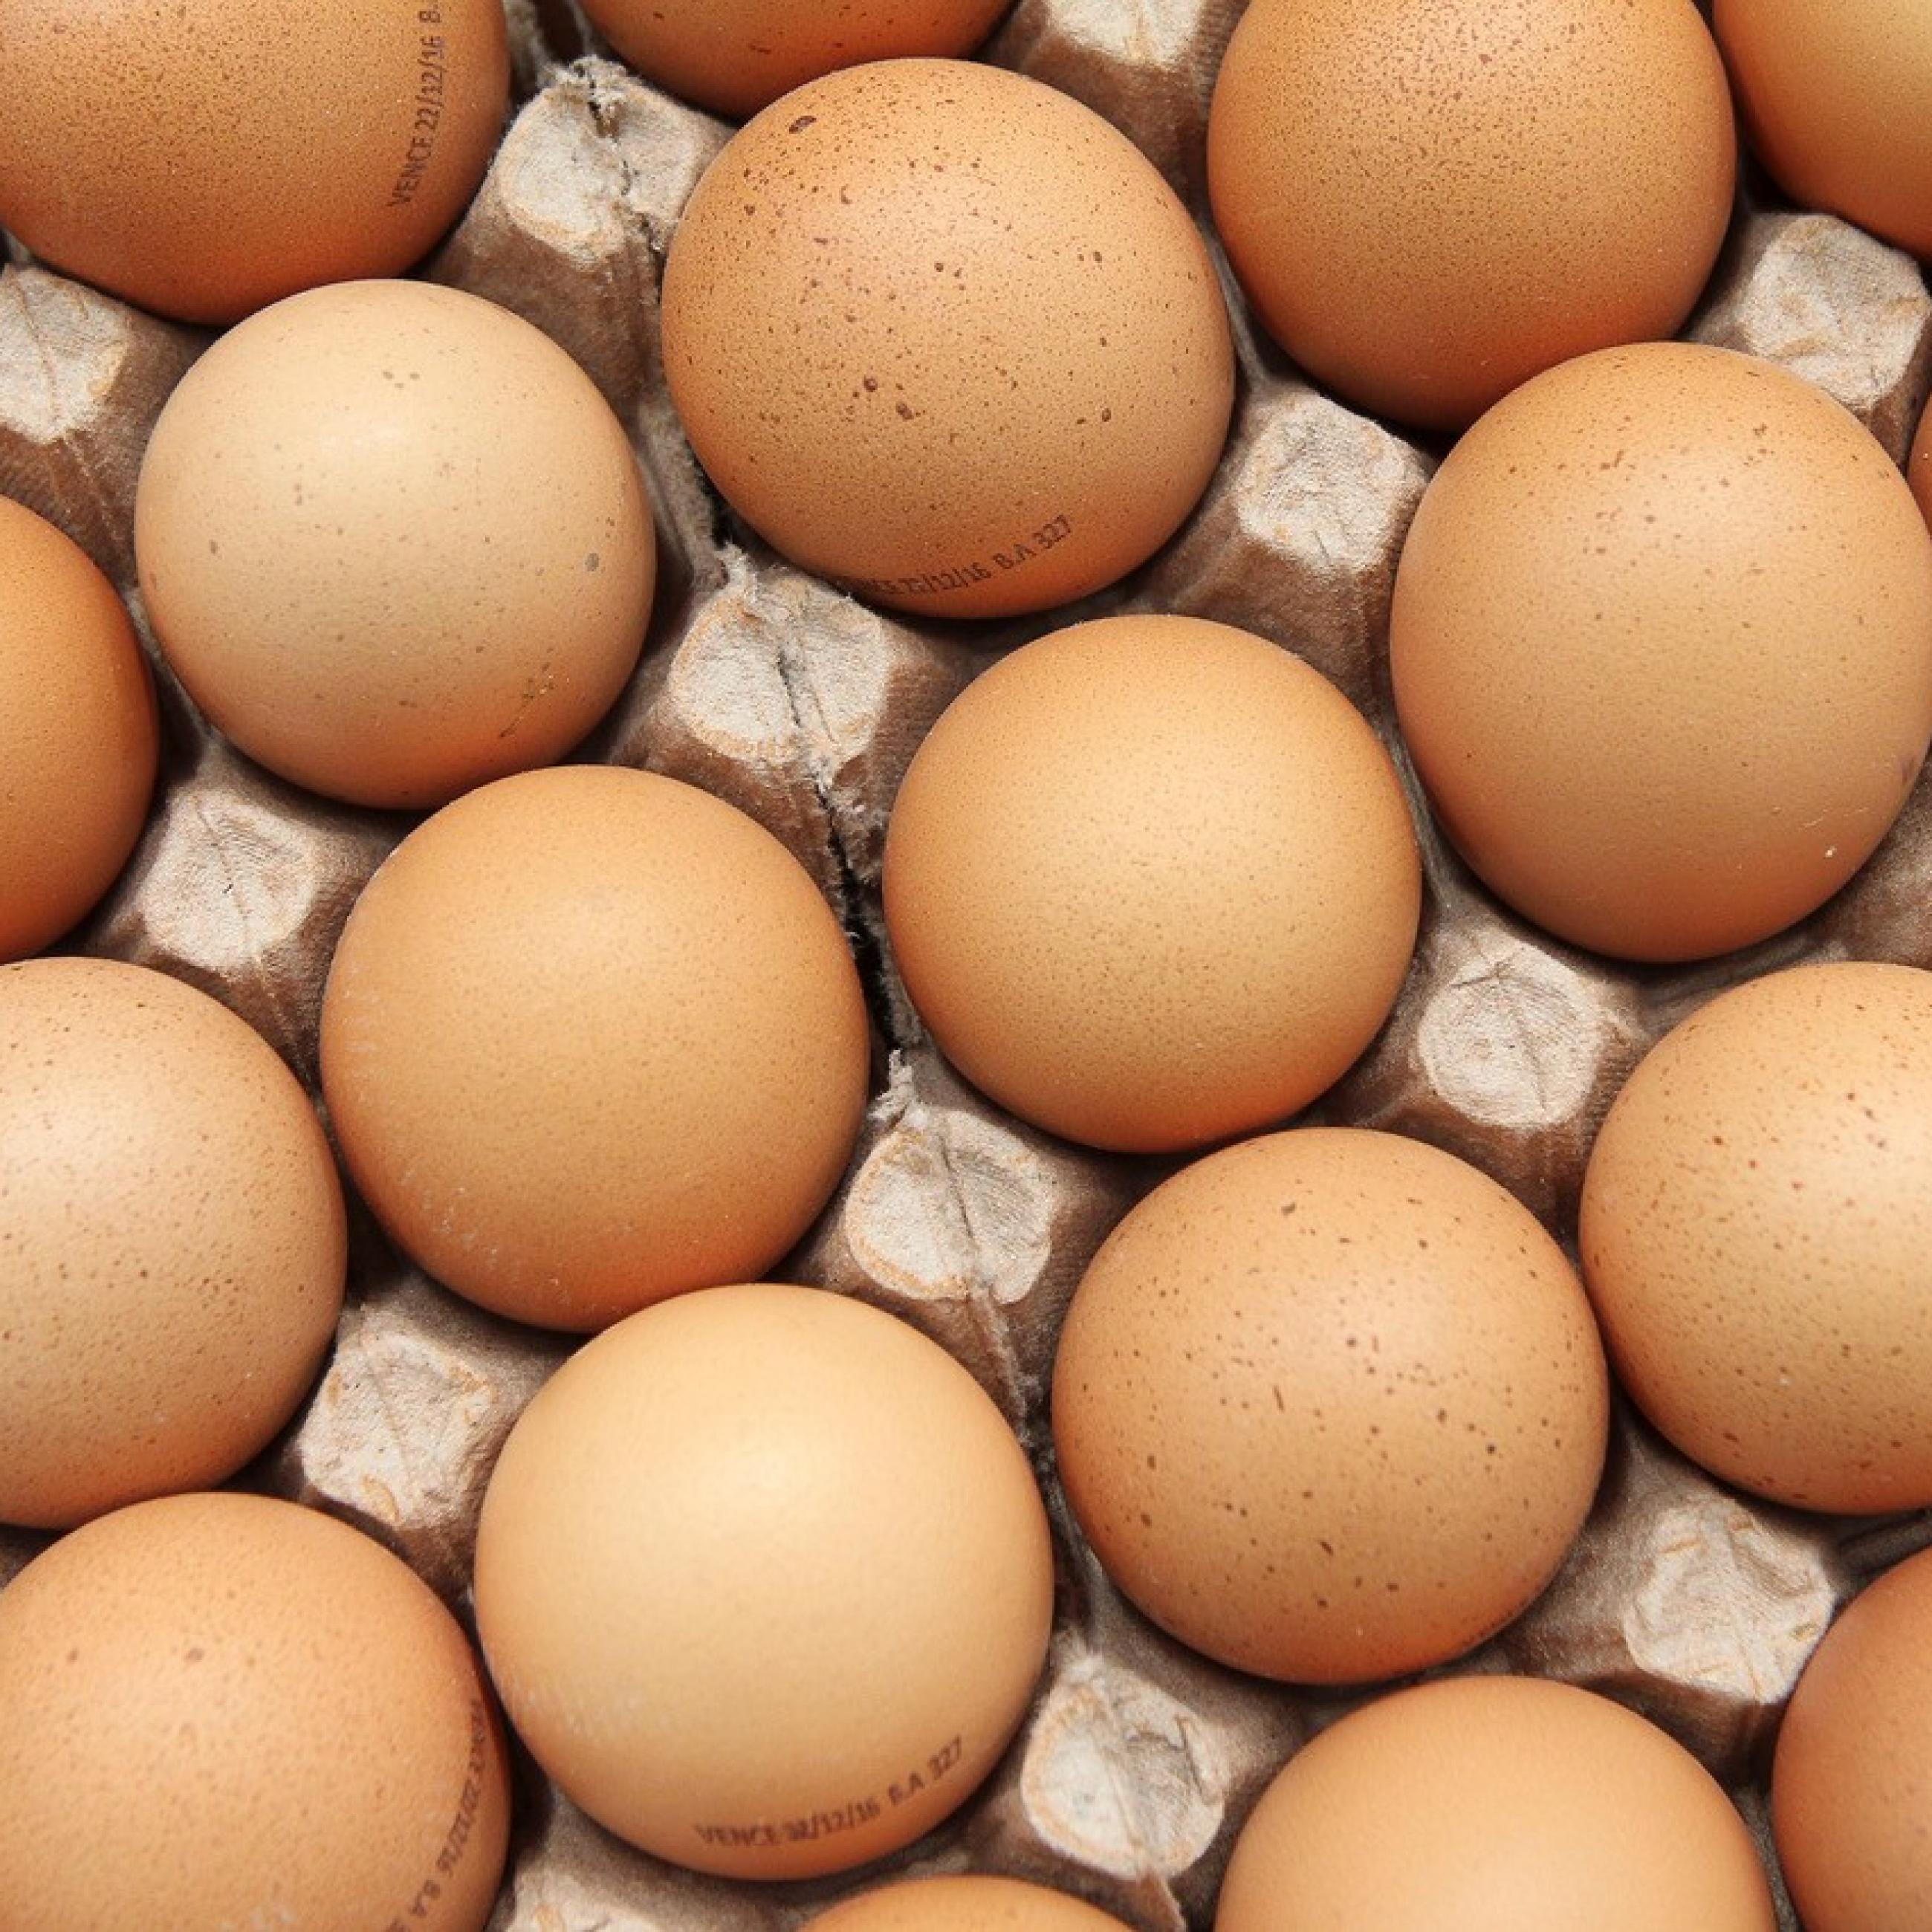 Several brown eggs are shown in a cardboard egg carton.